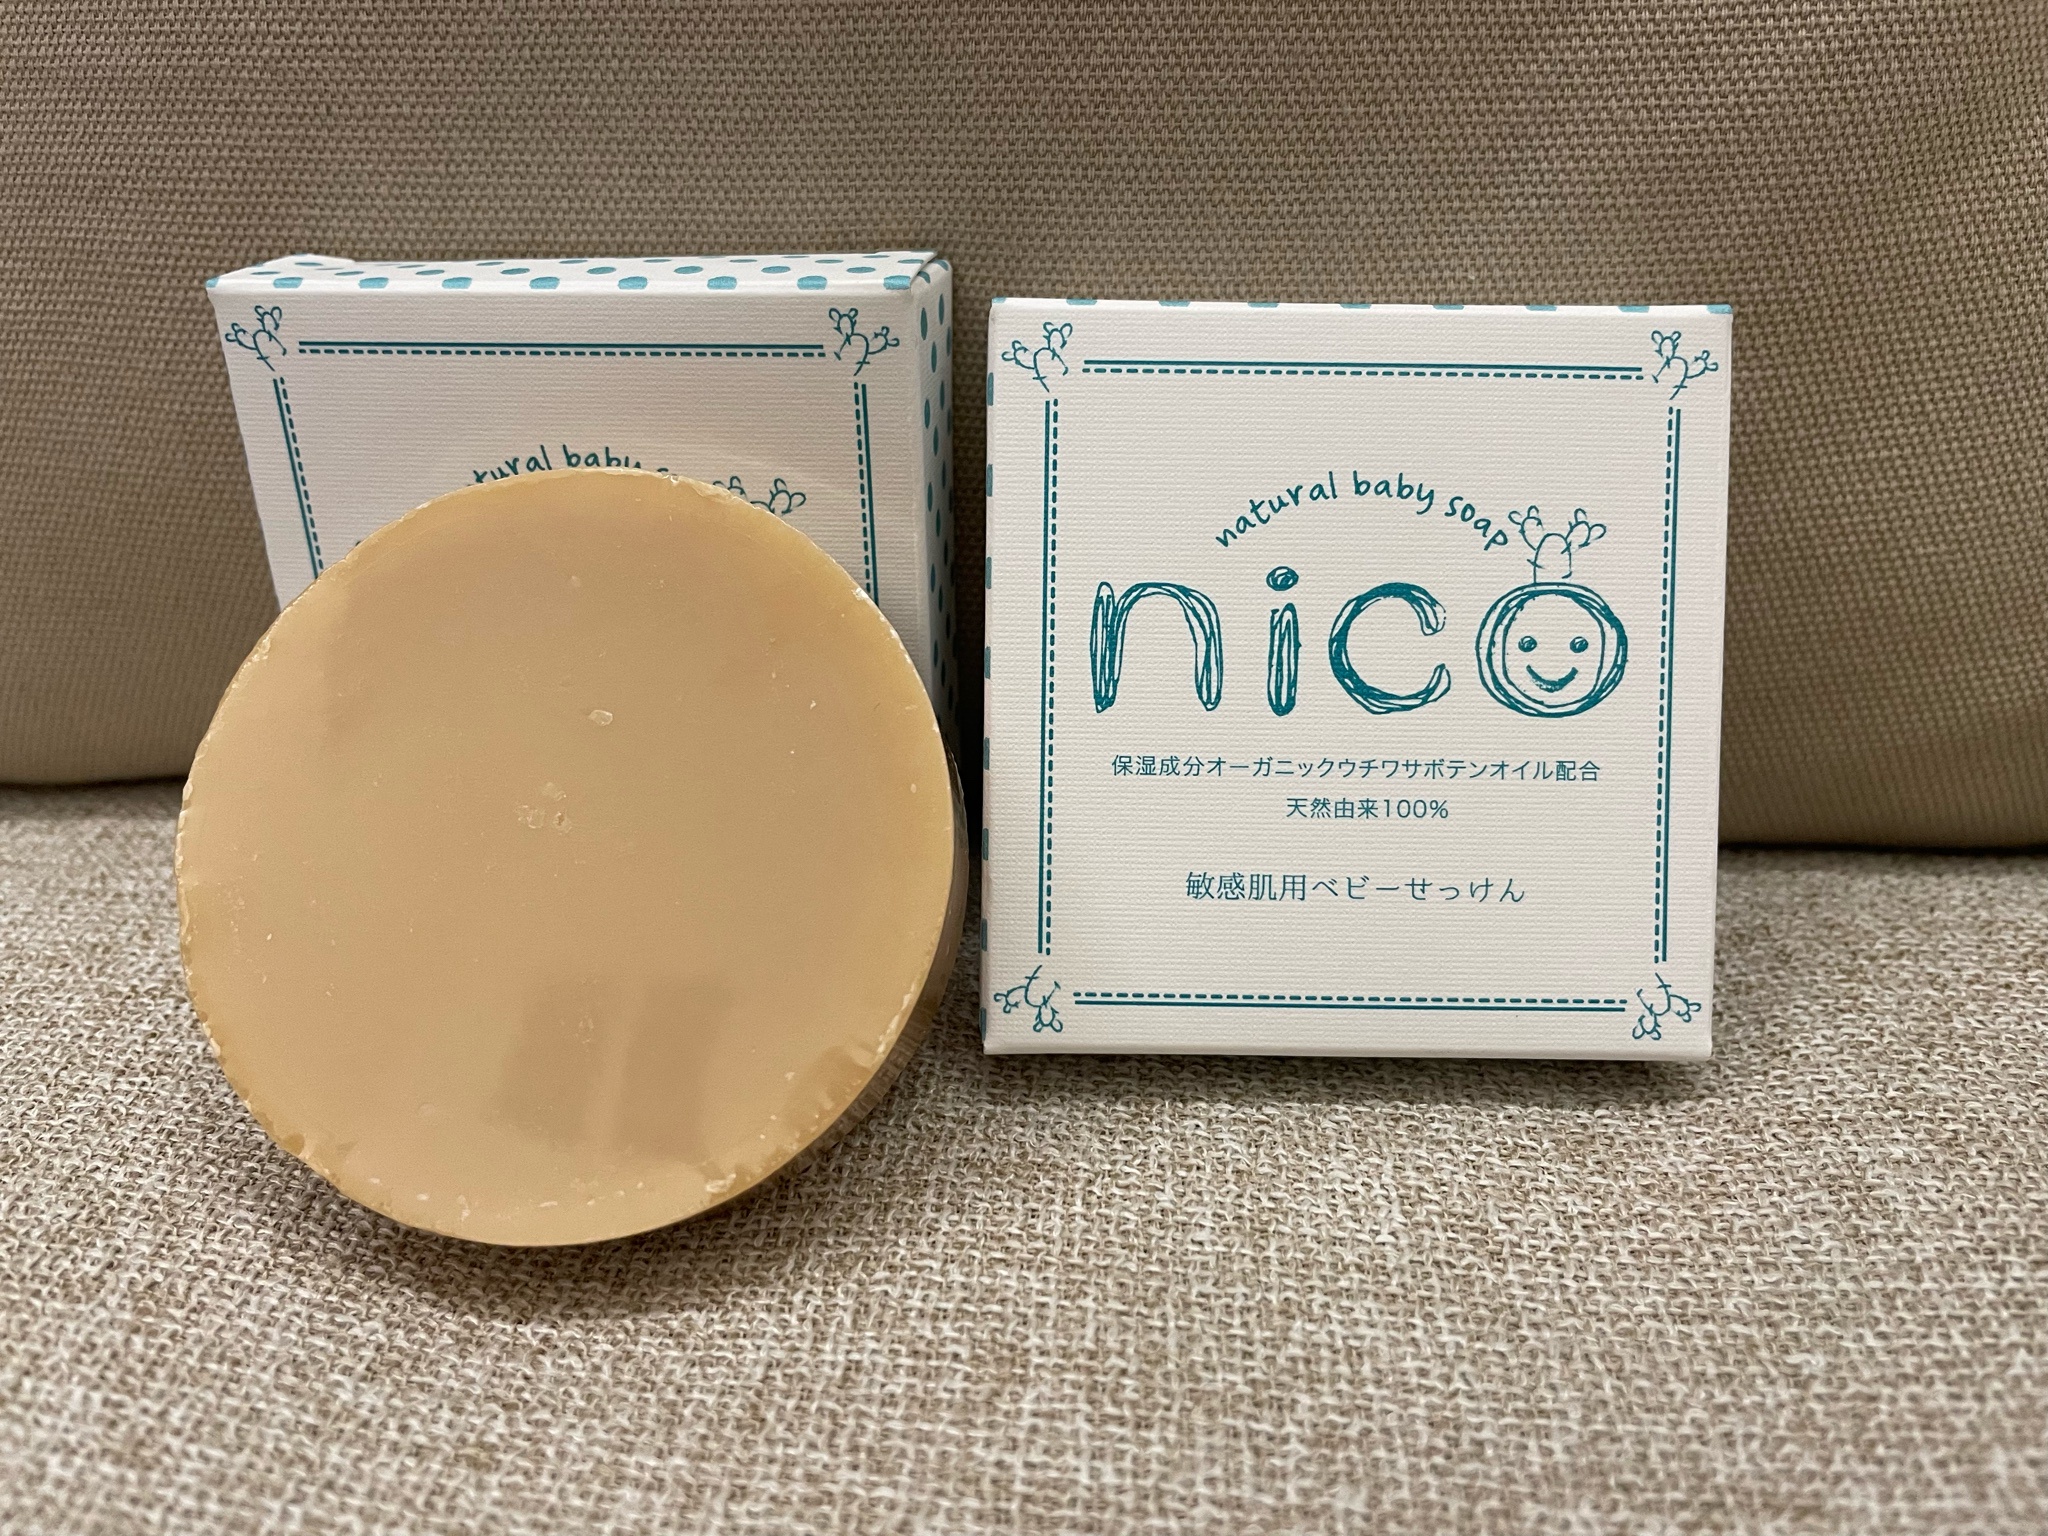 nico soap / natural baby soap nico 敏感肌用ベビーせっけんの商品 